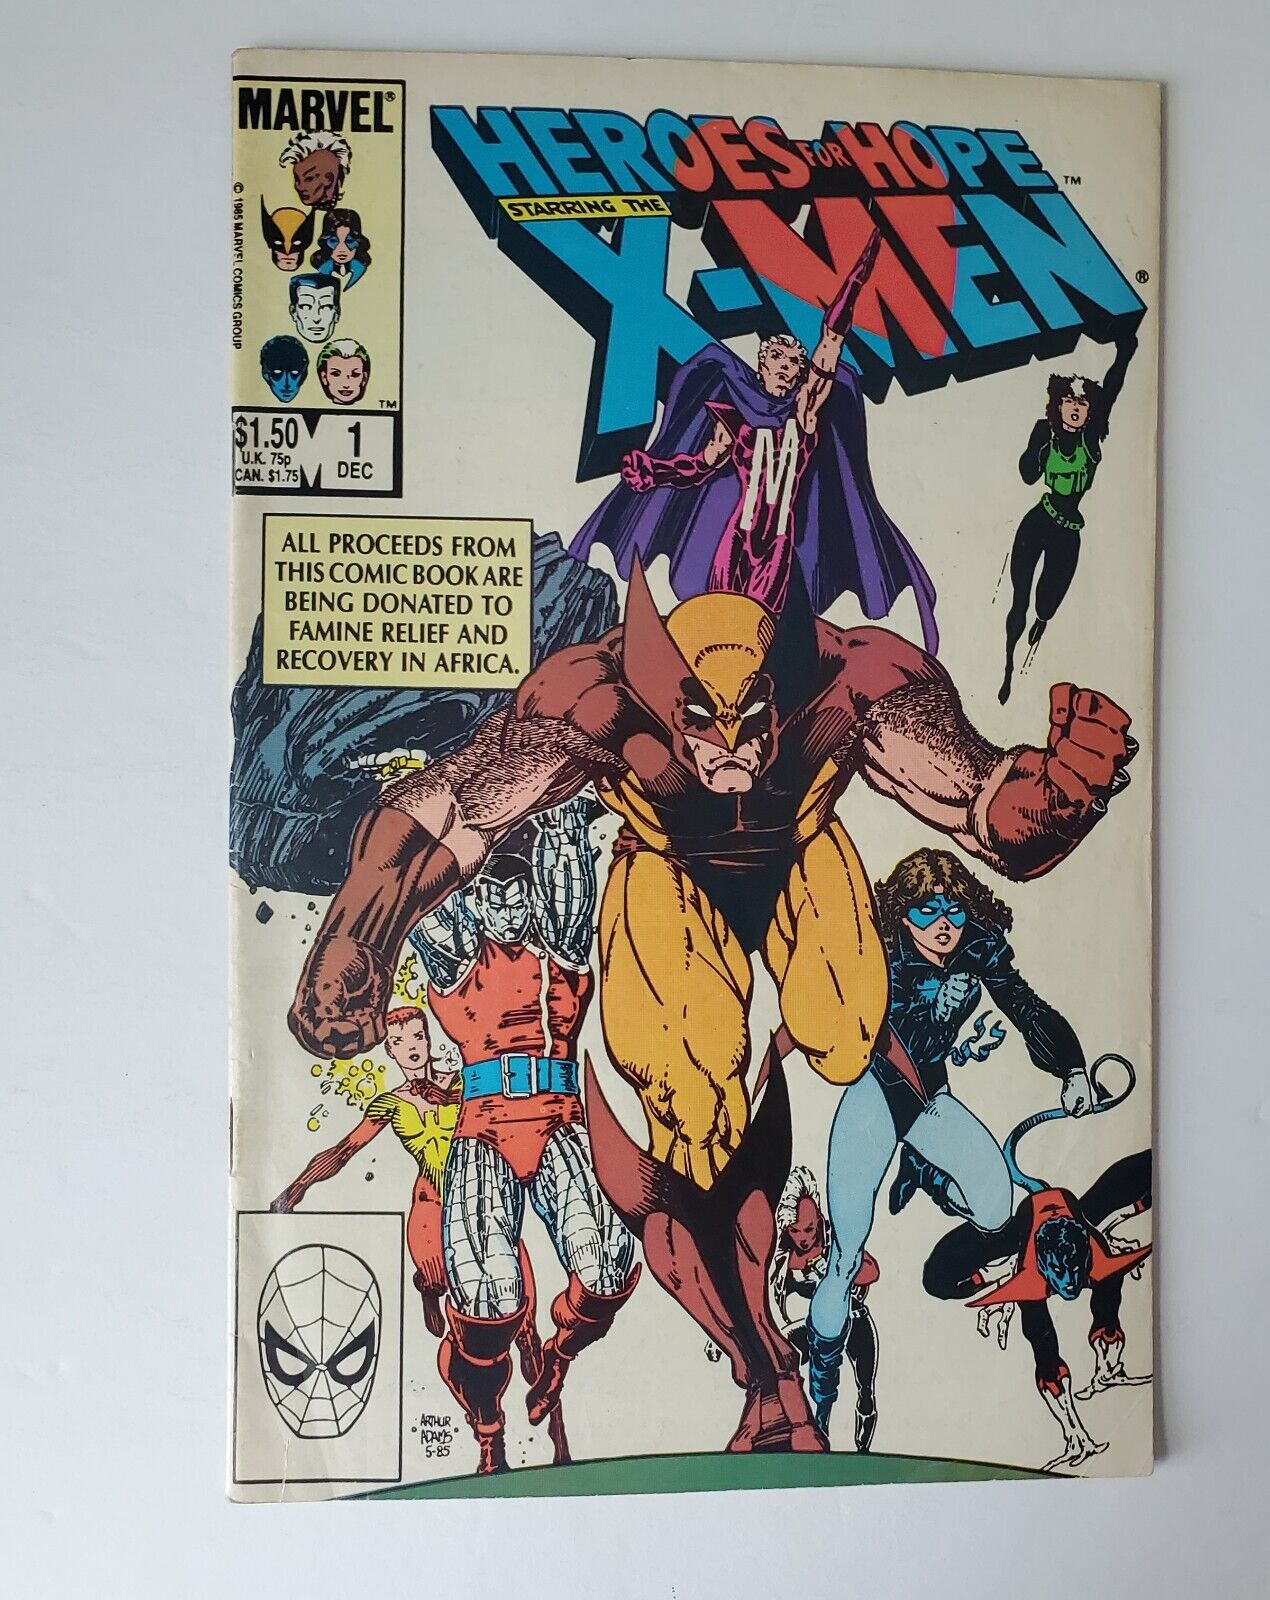 Heroes for Hope Starring the X-Men #1 (1985) Marvel Comics